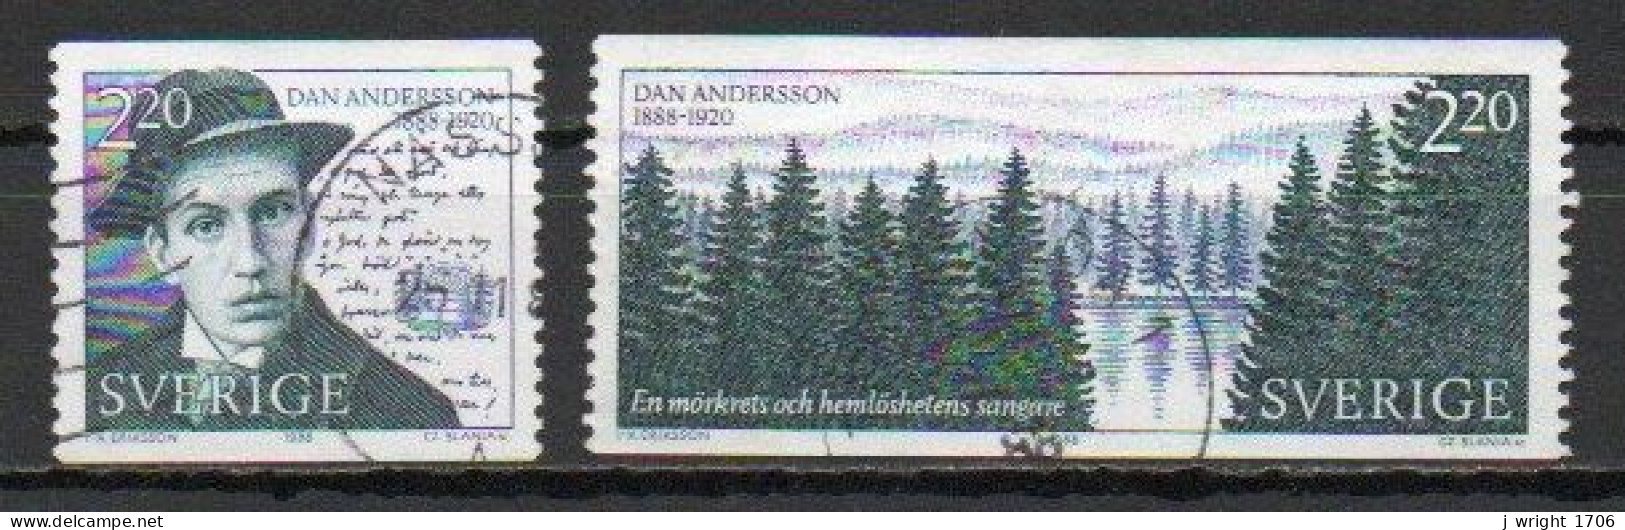 Sweden, 1988, Dan Andersson, Set, USED - Gebraucht